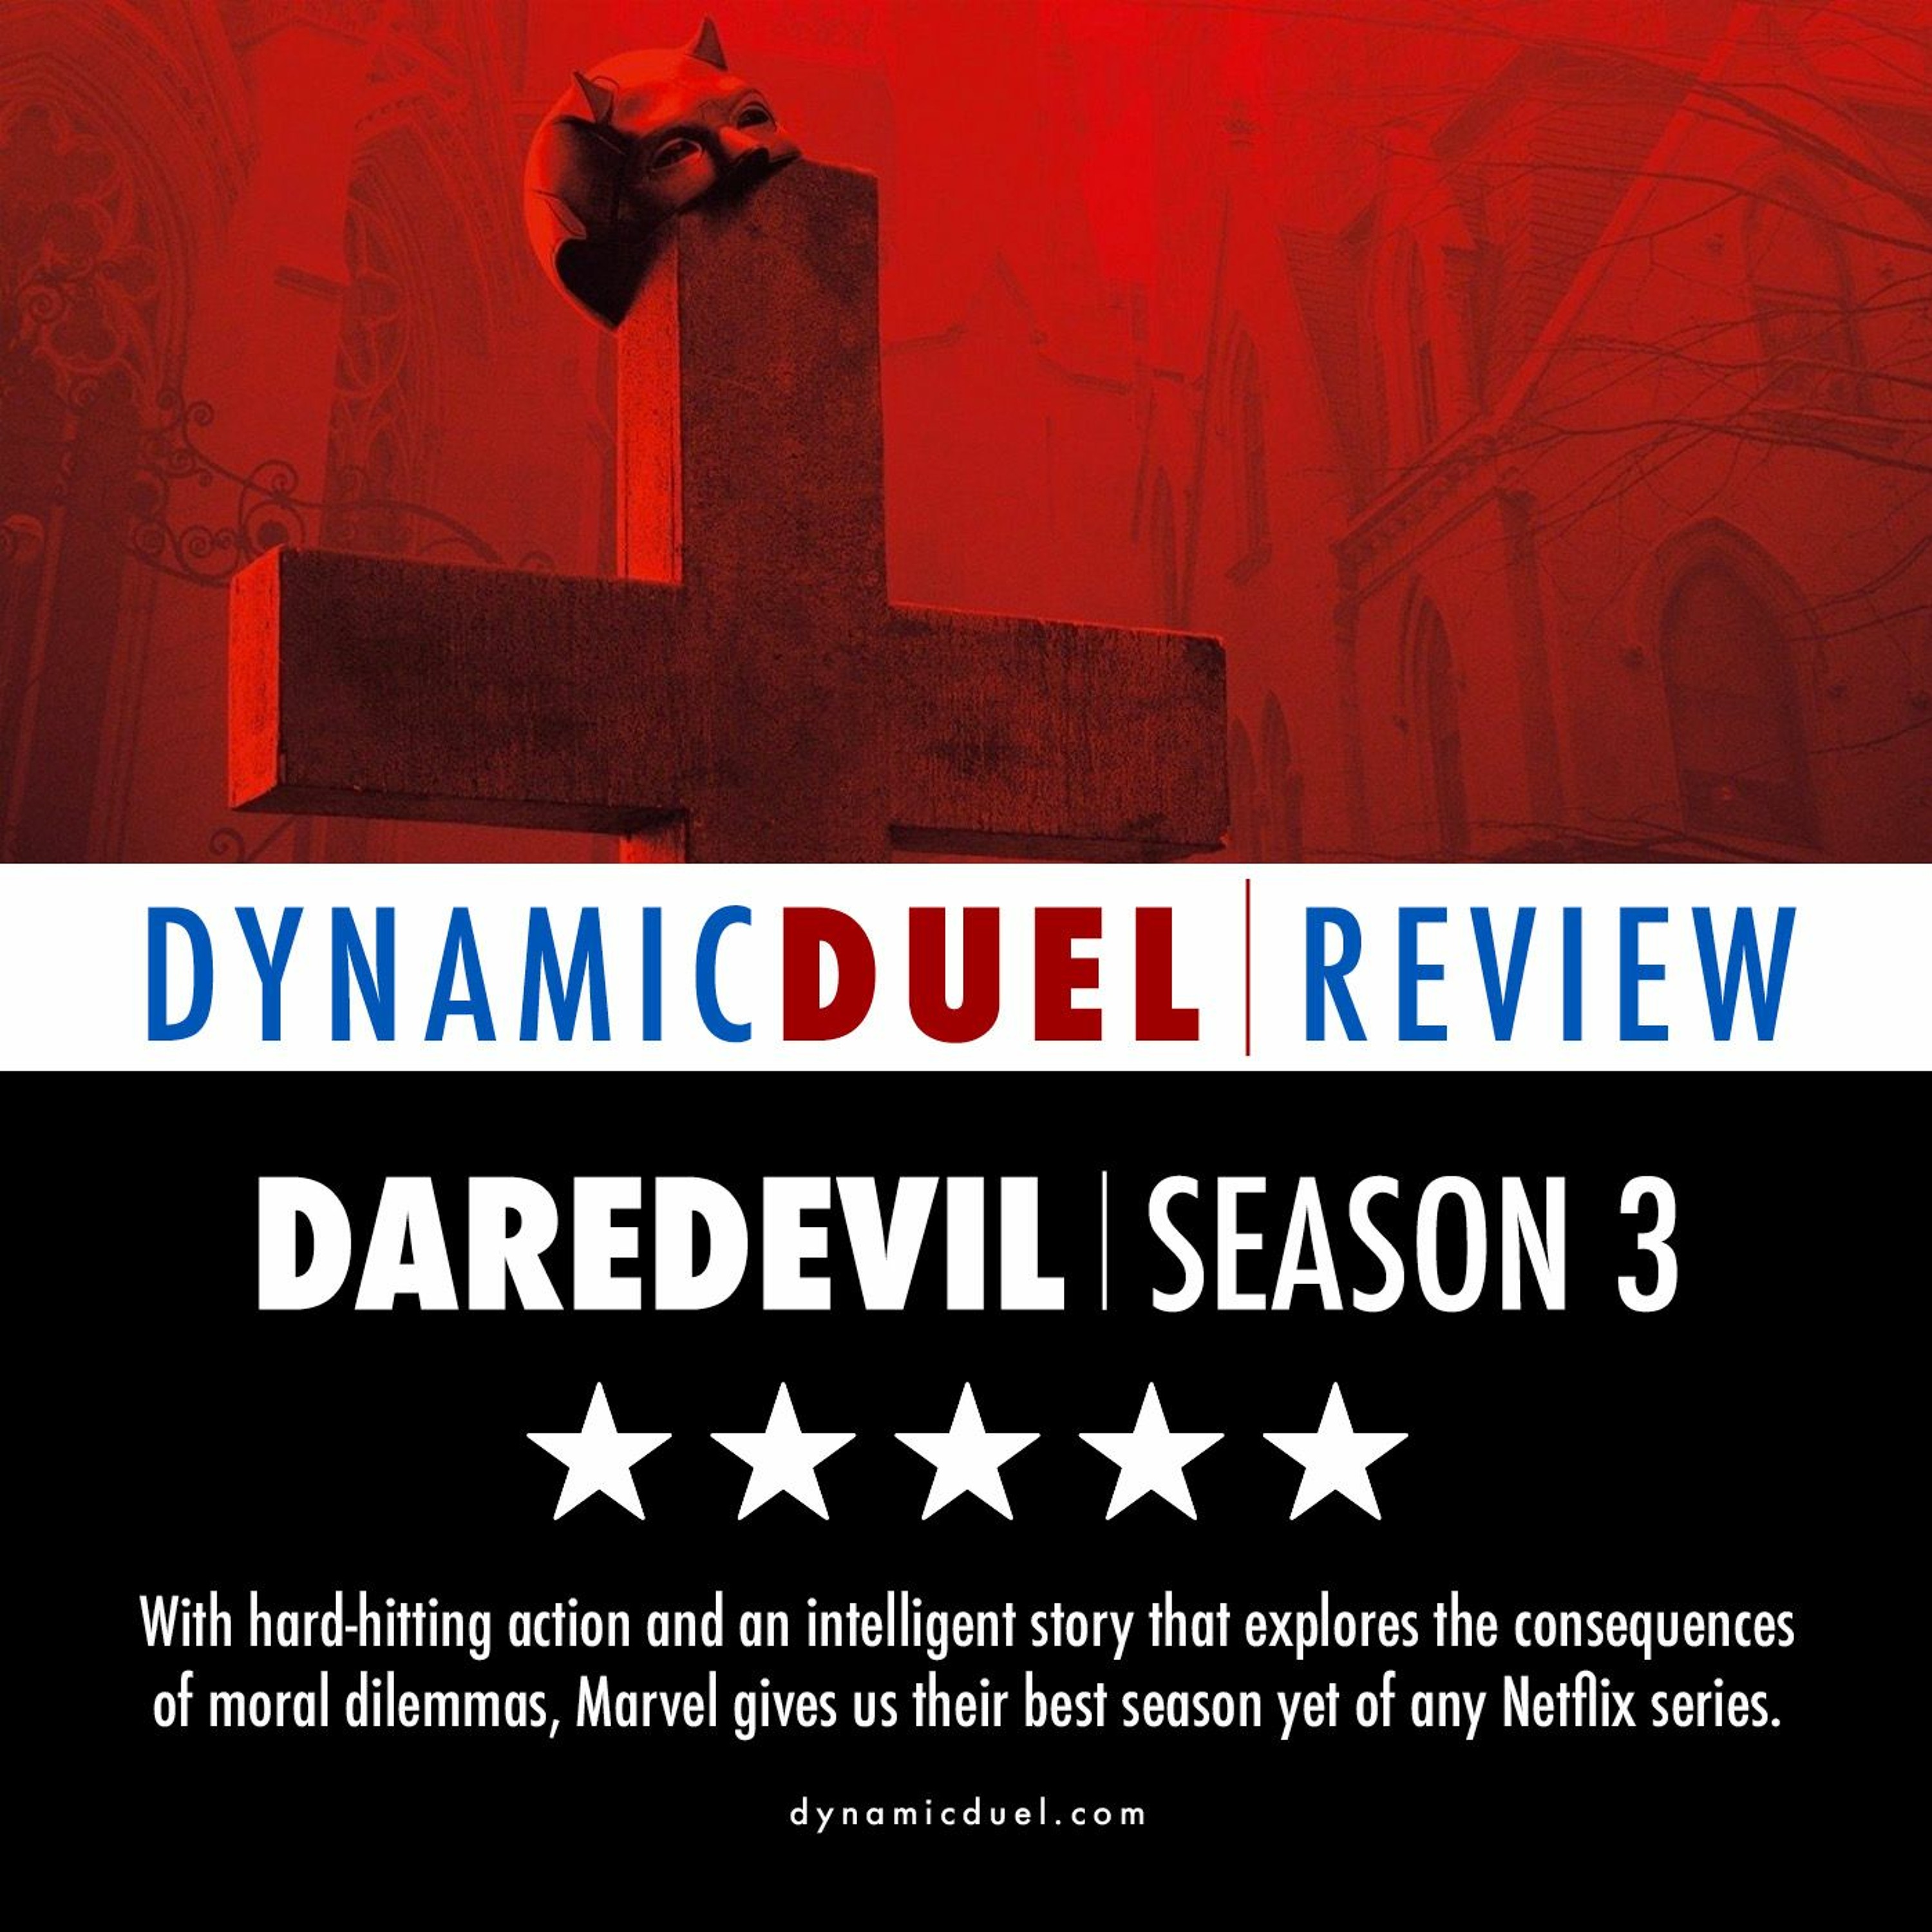 Daredevil Season 3 Review Image